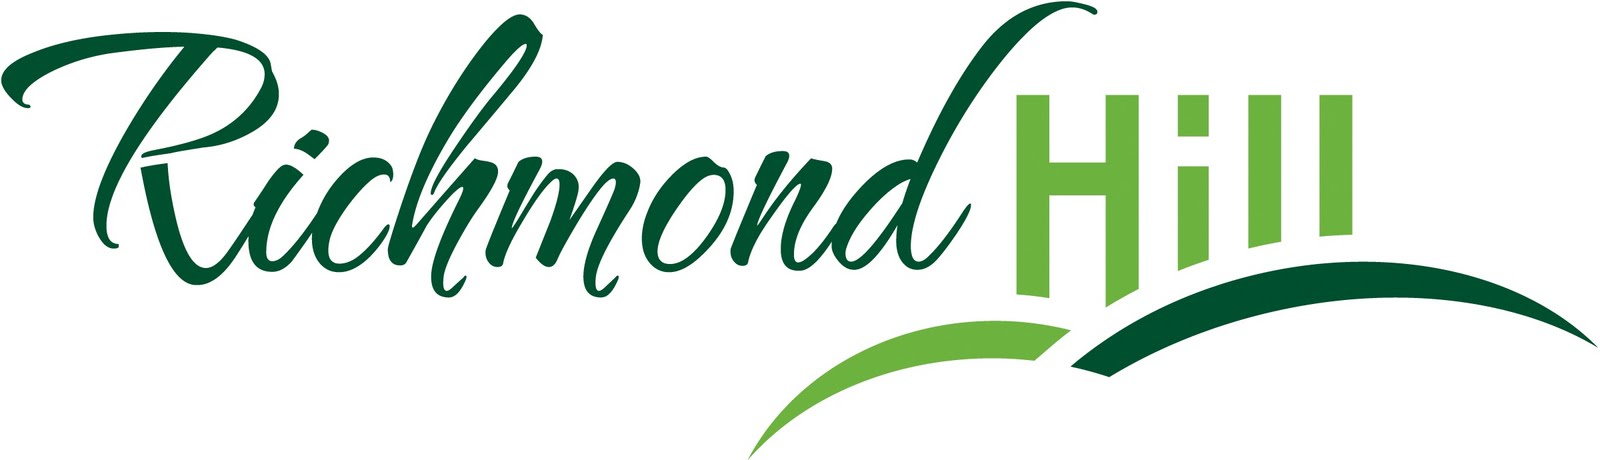 City of Richmond Hill Logo